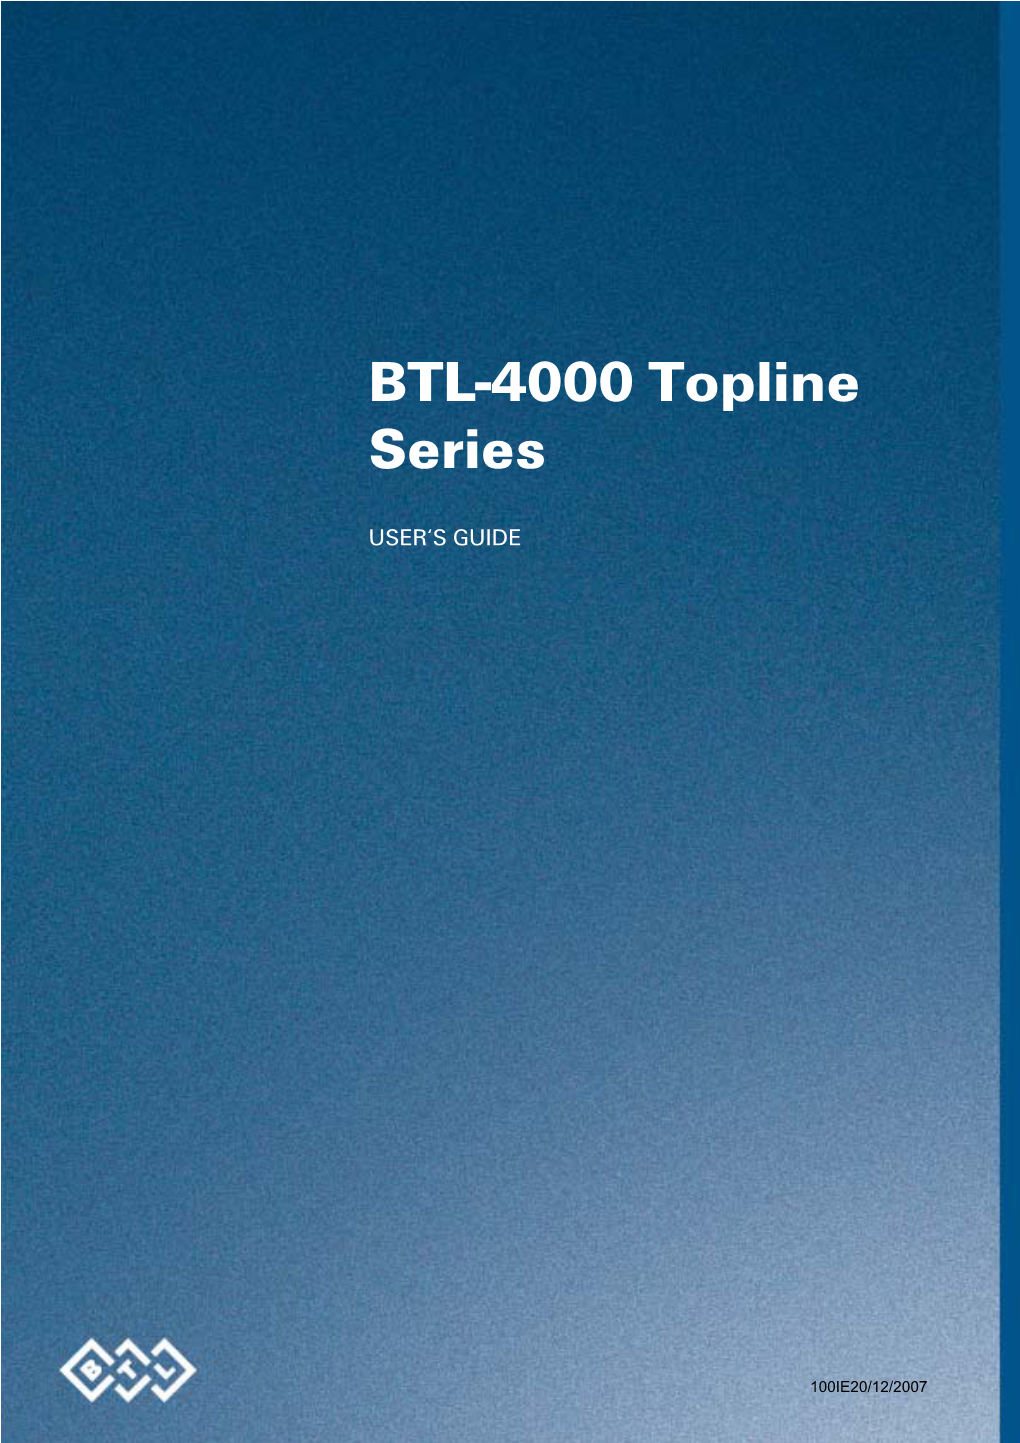 BTL-4000 Topline Series Devices